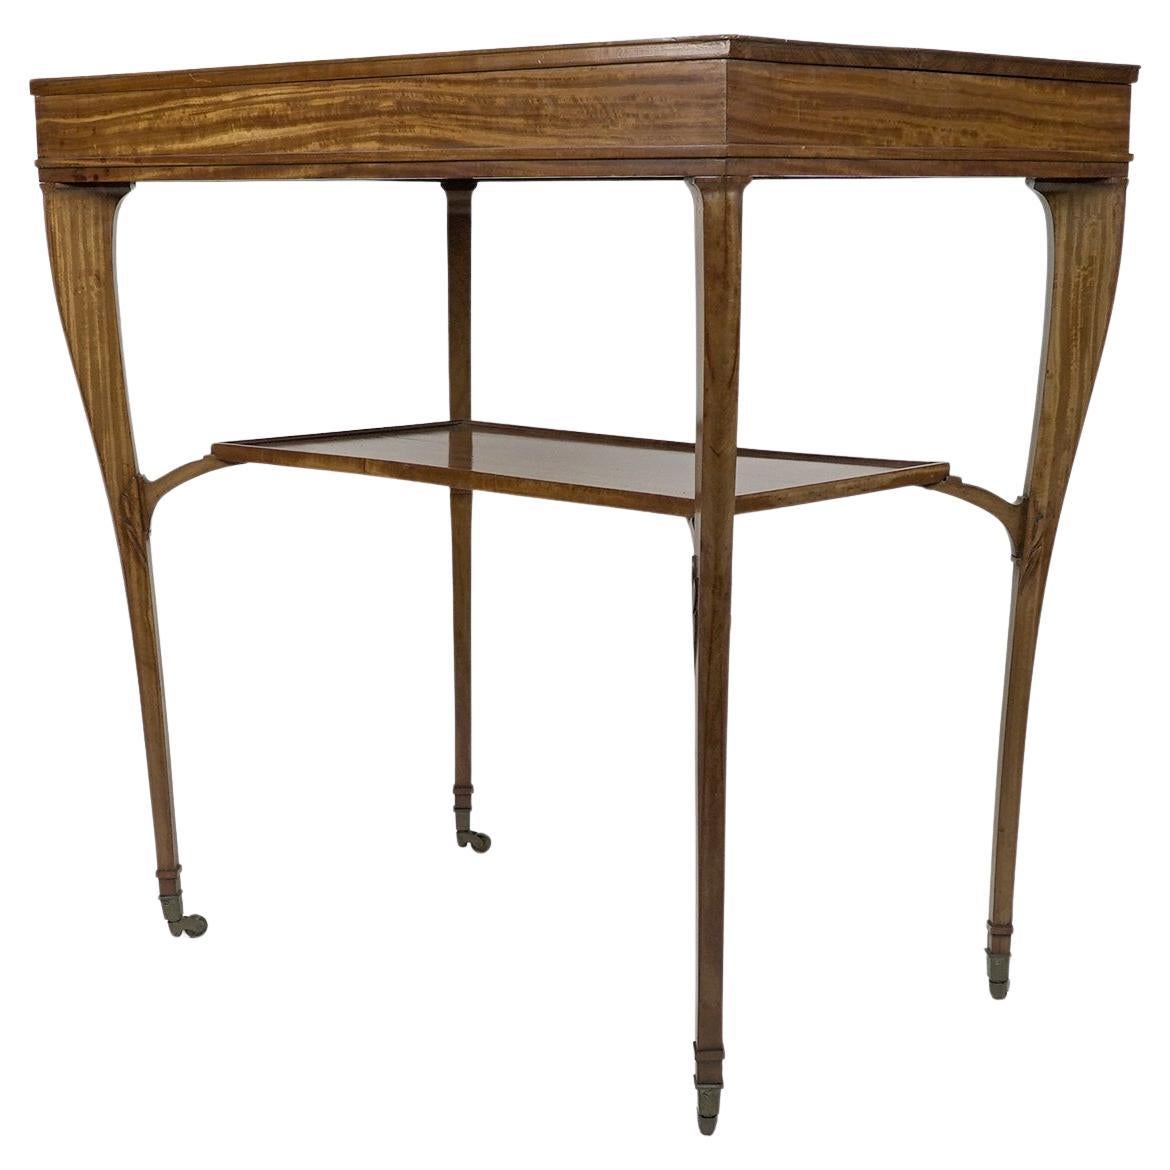 A H Mackmurdo for E Goodall. A rare early Art Nouveau Satinwood side table